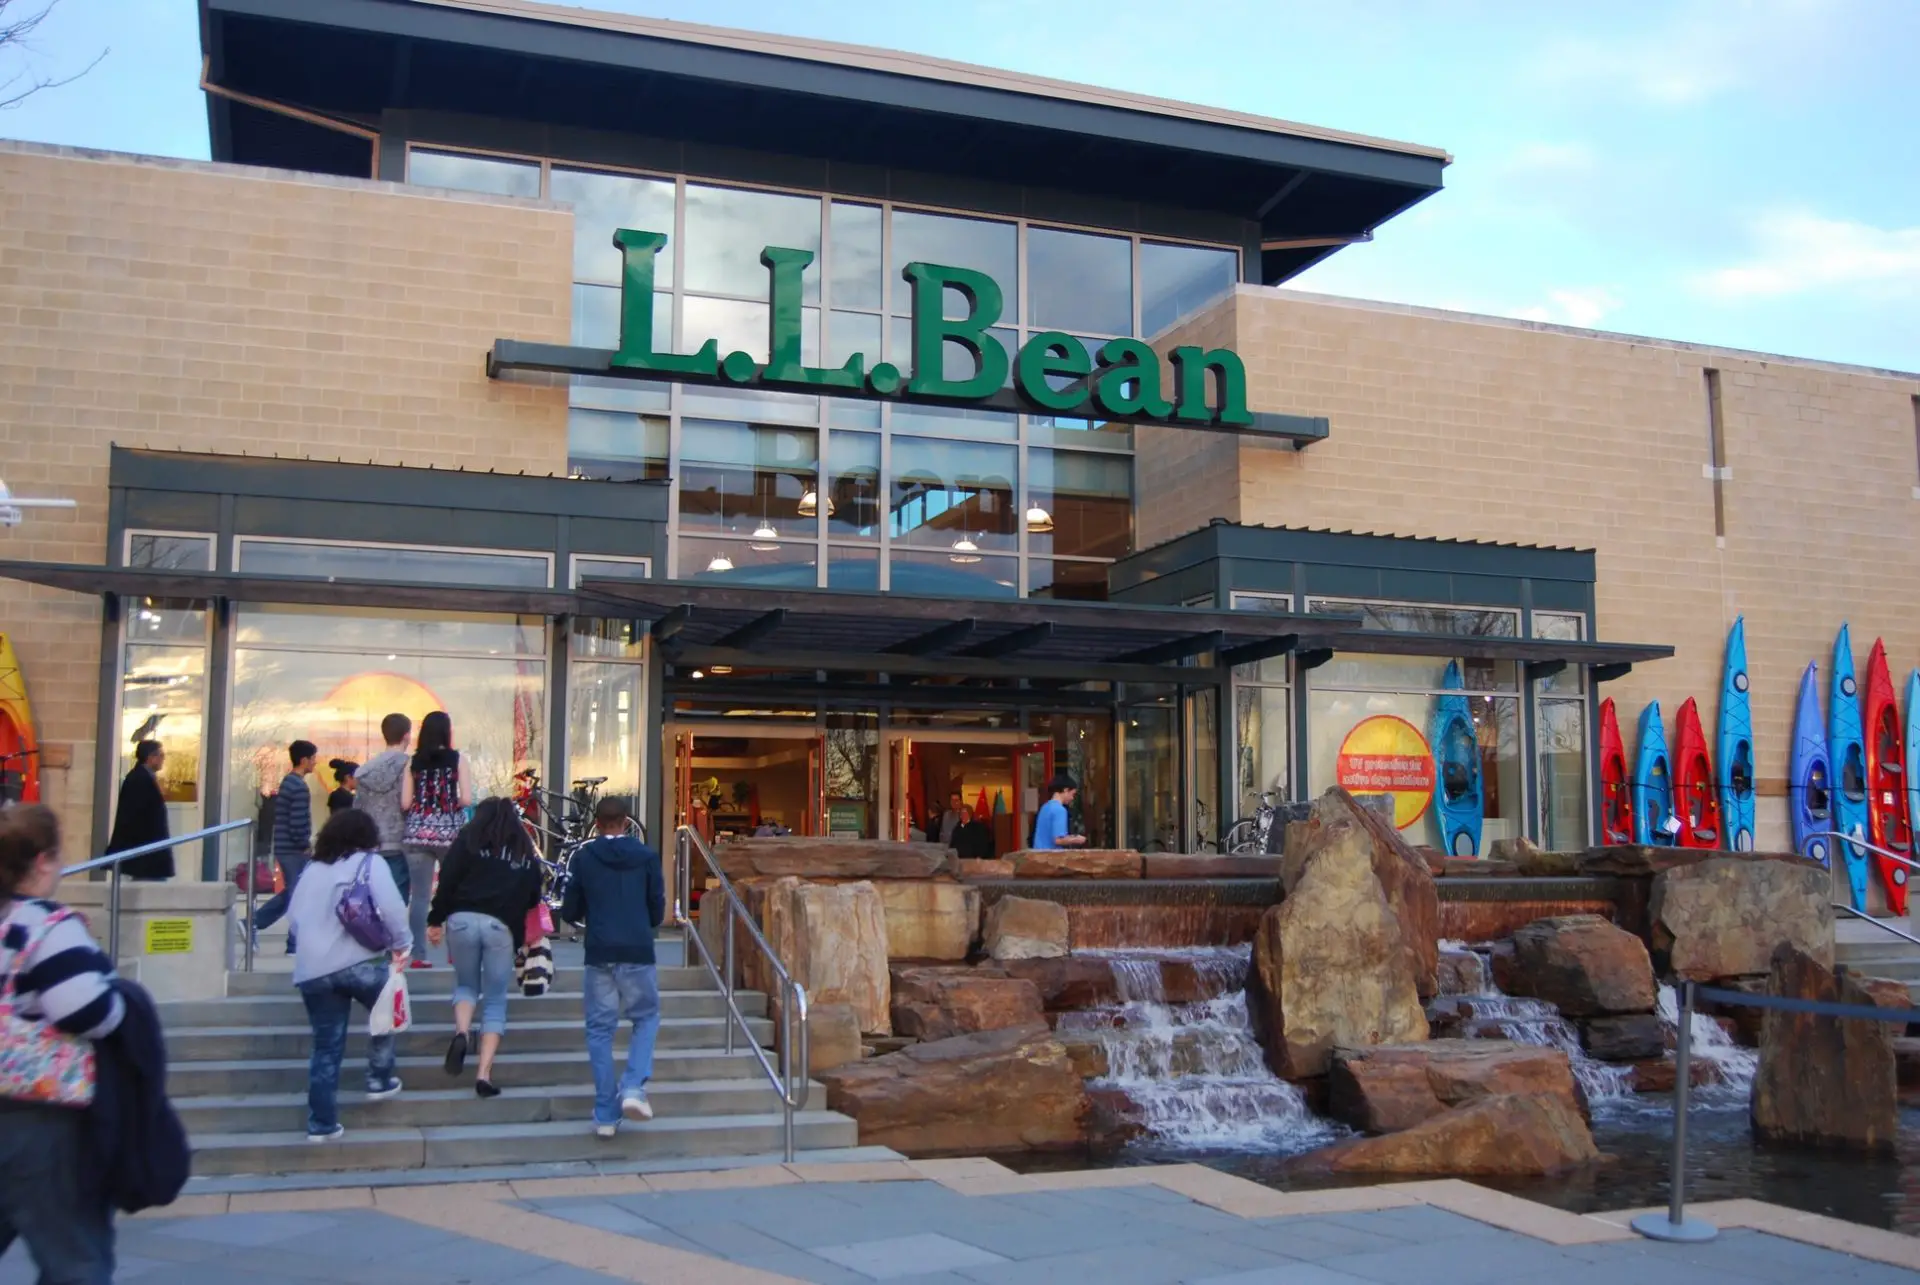 LL Bean Building Outdoor Adventure Center?